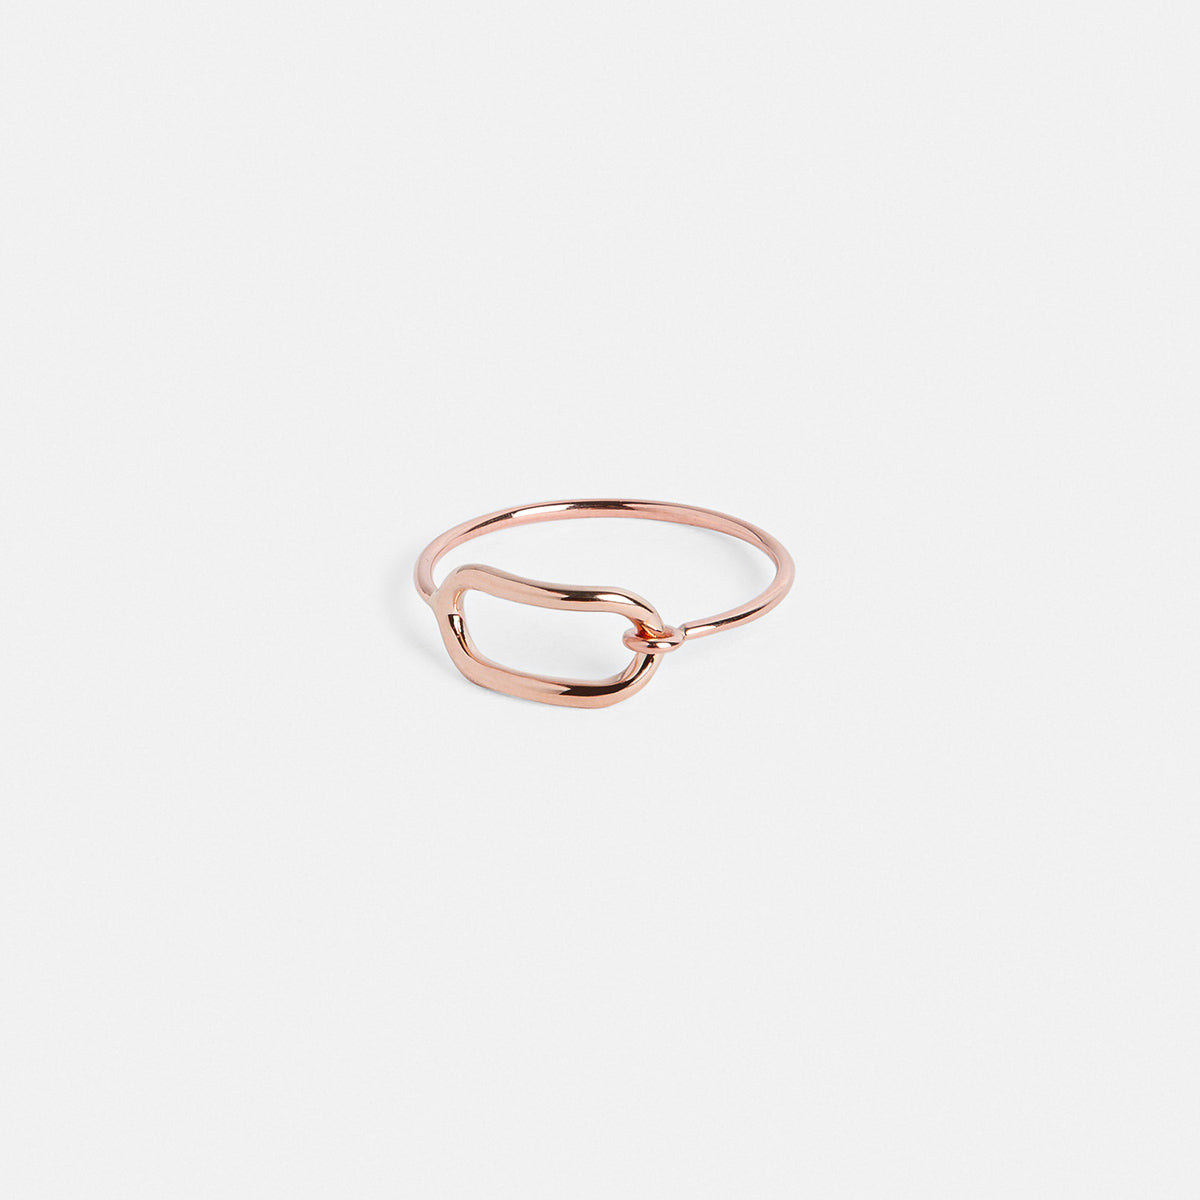 Vel Alternative Ring in 14k Rose Gold by SHW Fine Jewelry